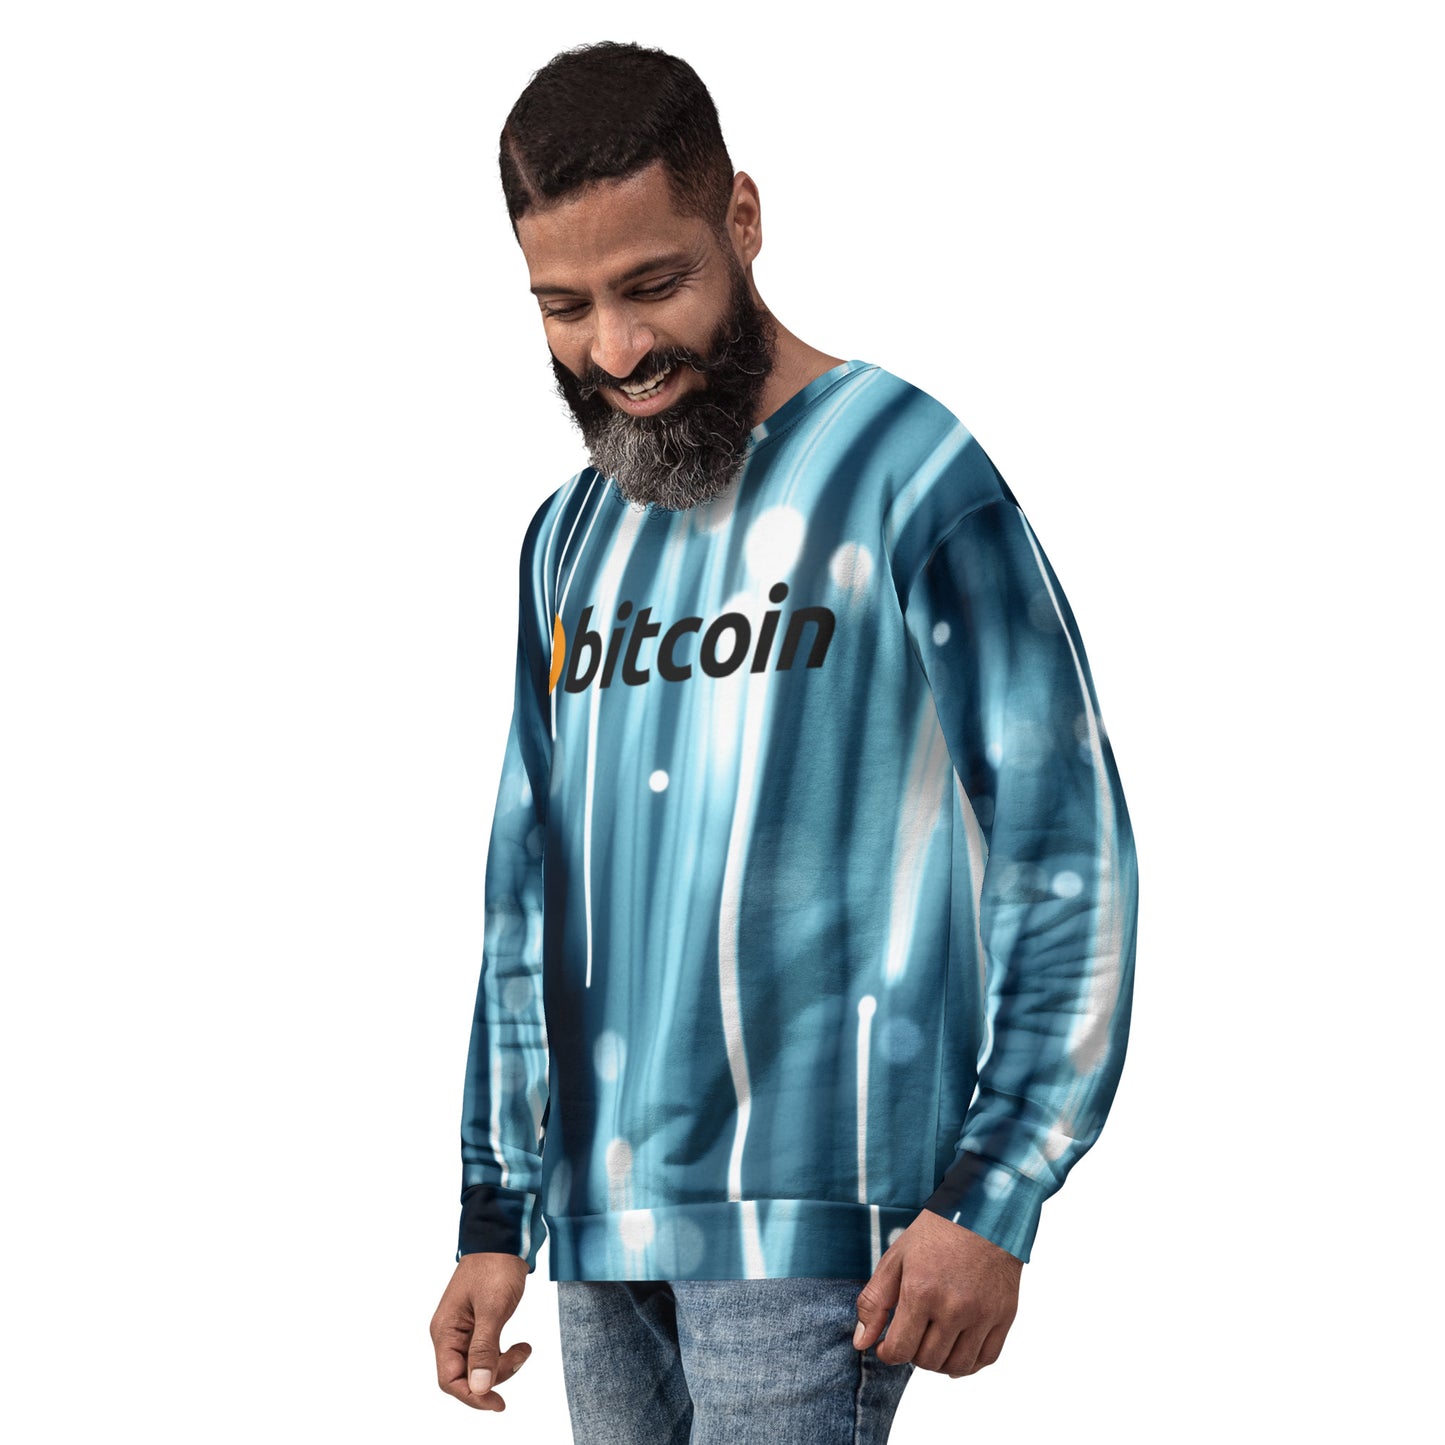 Bitcoin Optics Sweatshirt